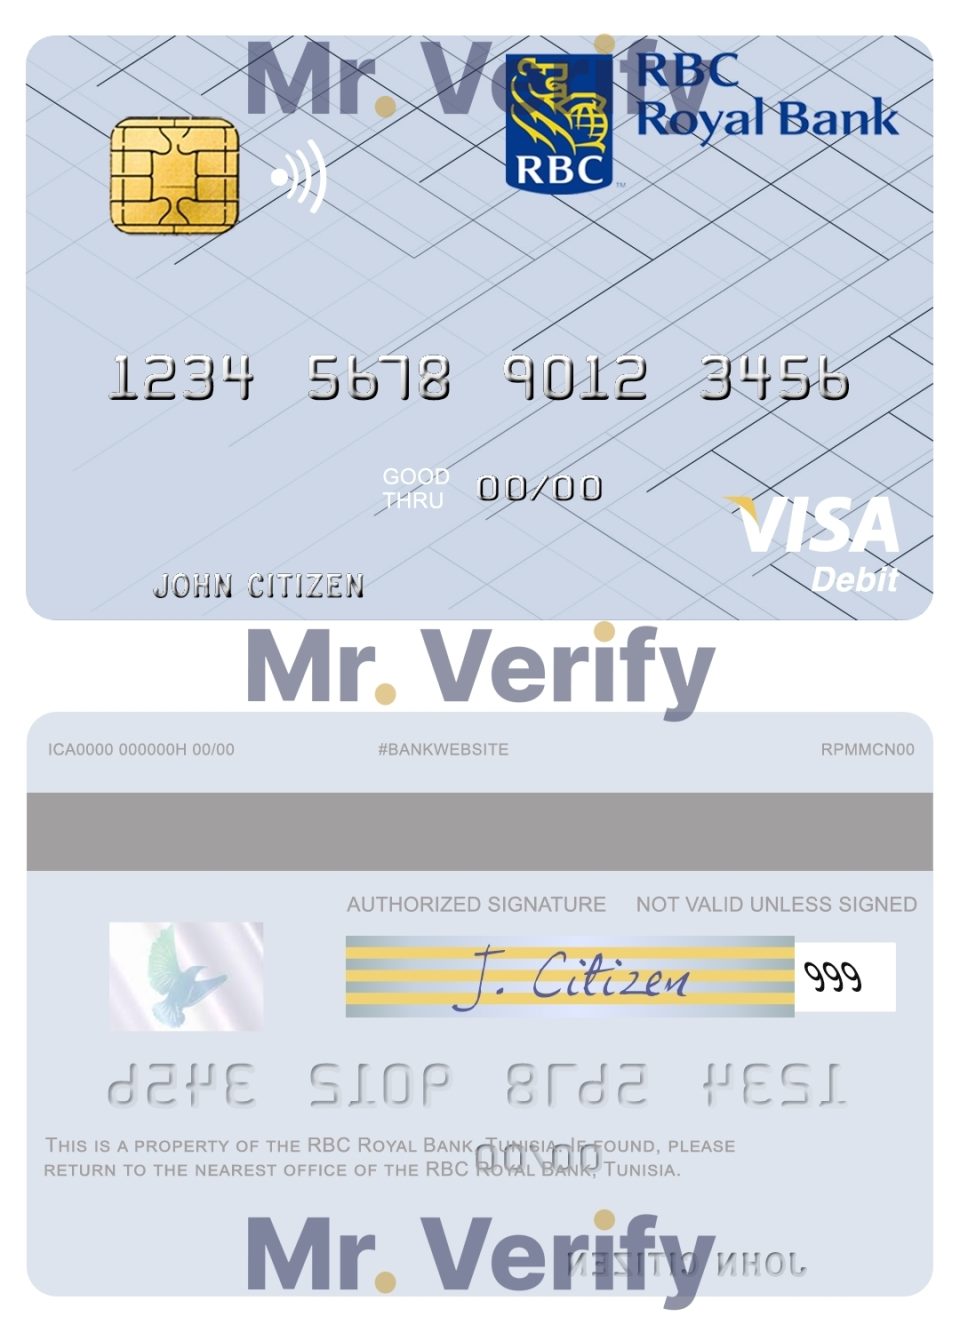 Fillable Tunisia RBC Royal Bank visa debit card Templates | Layer-Based PSD